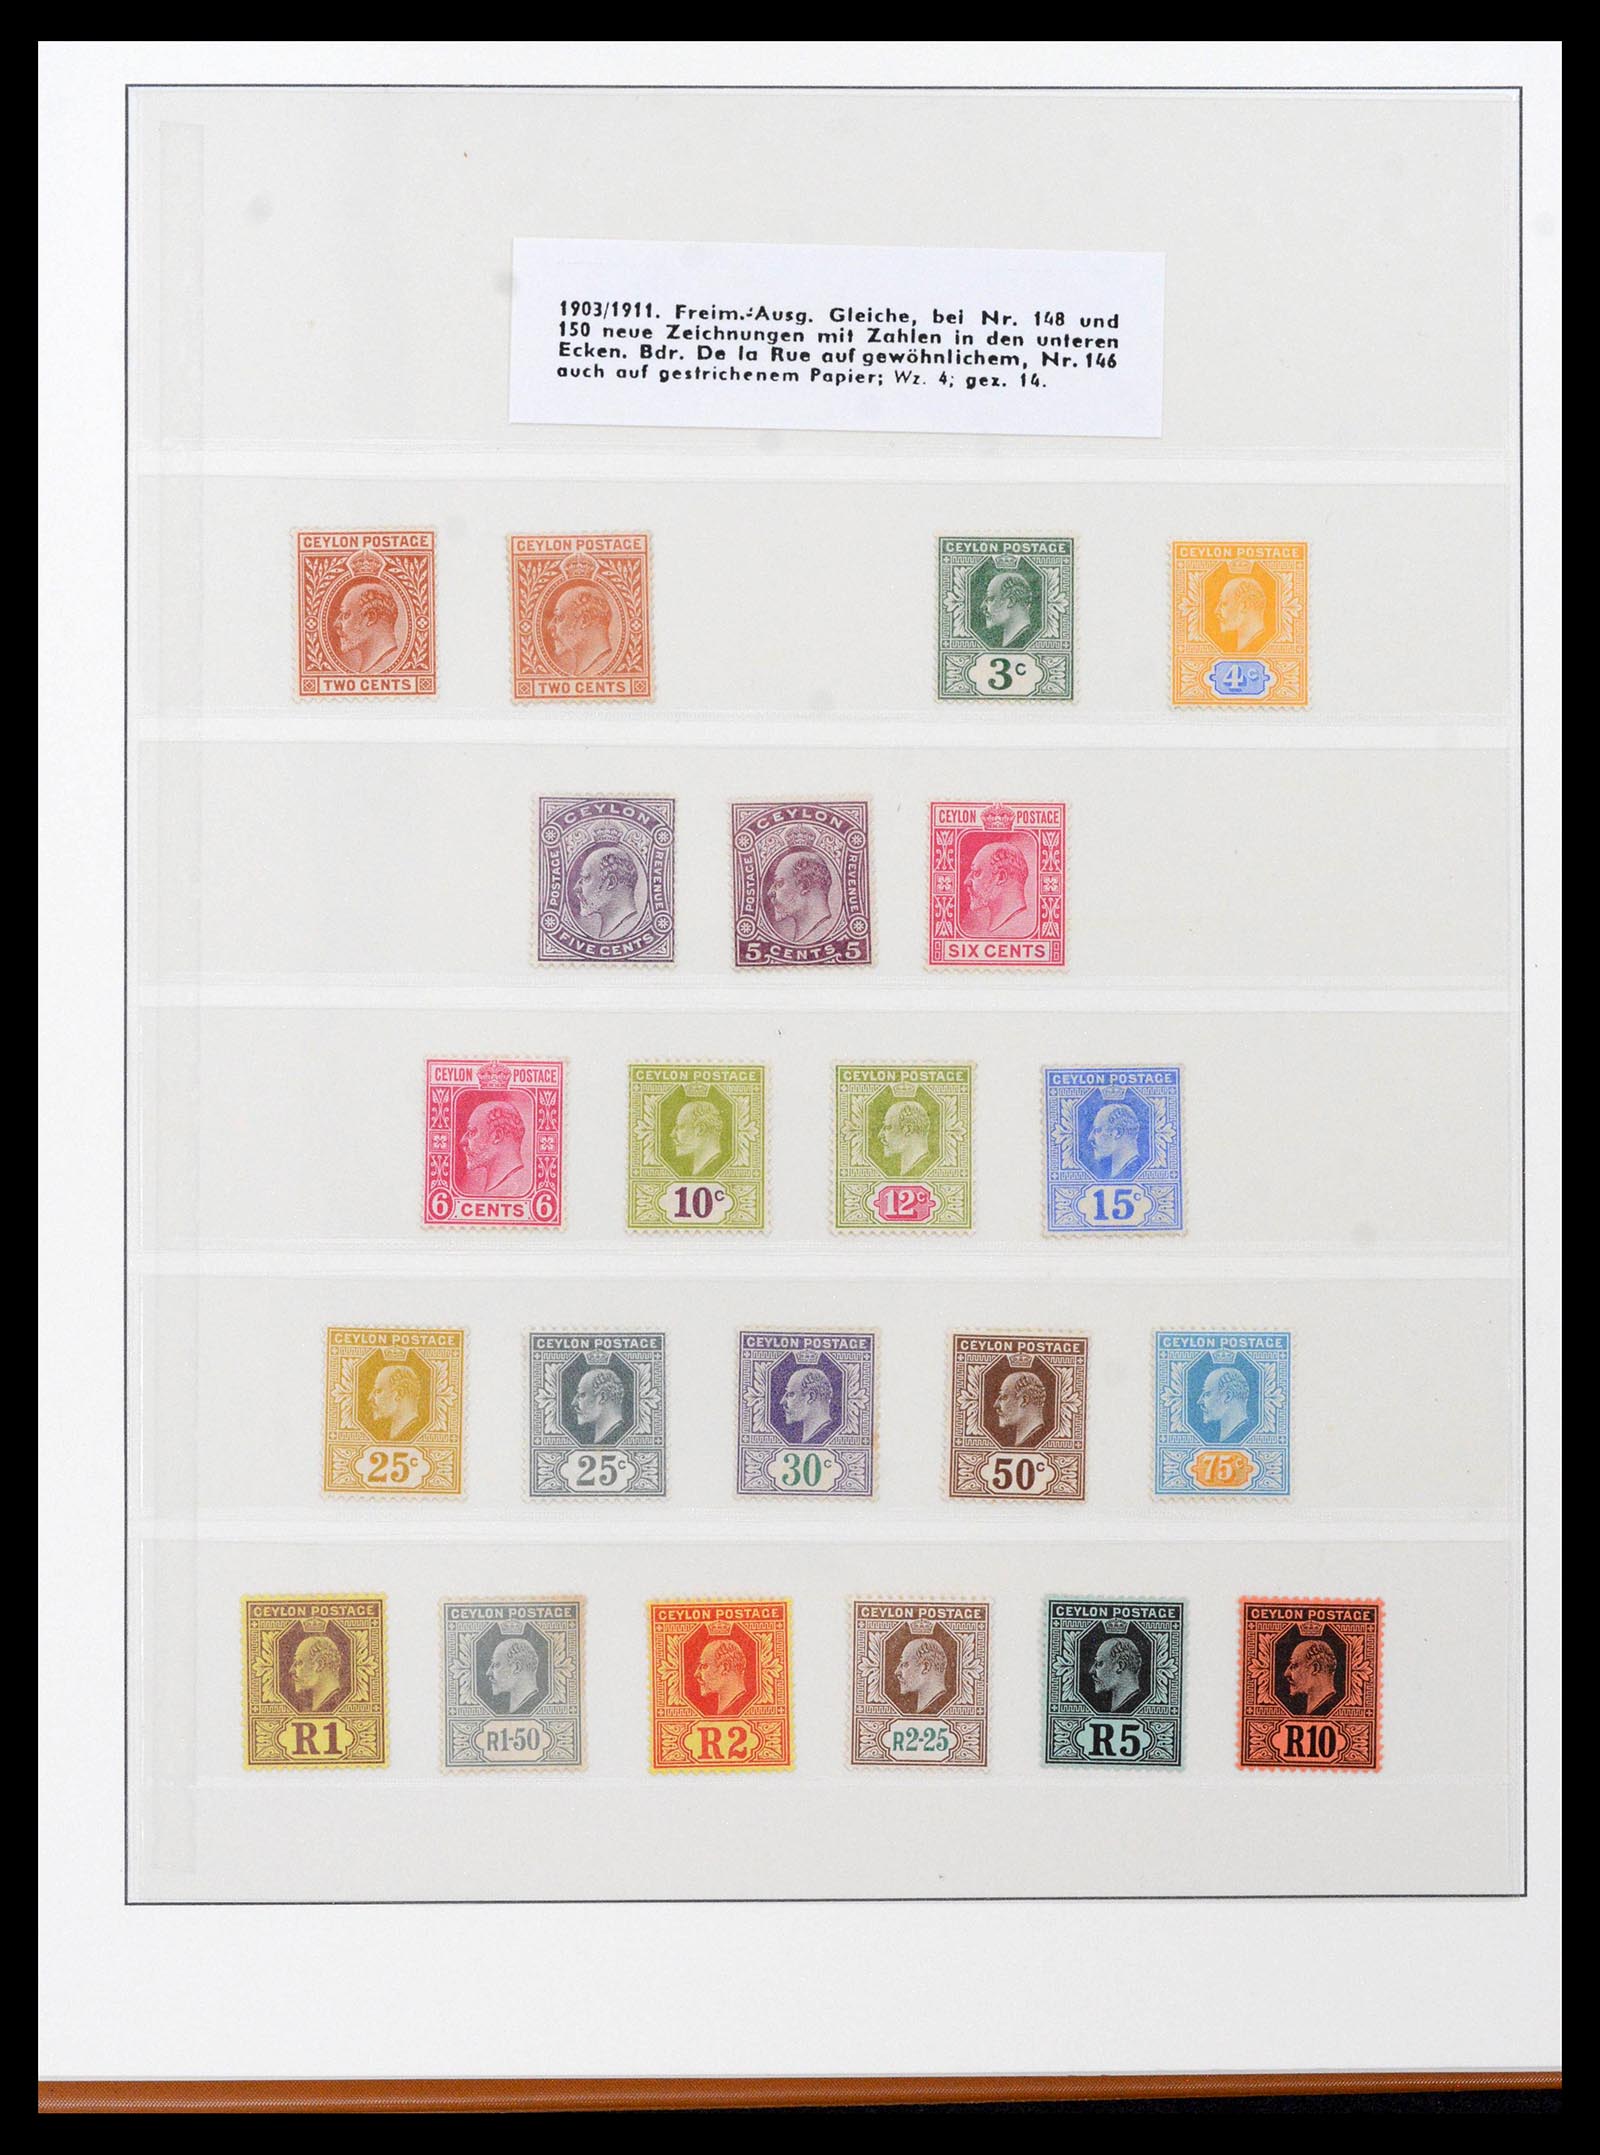 39003 0011 - Stamp collection 39003 Ceylon/Sri Lanka 1857-2003.